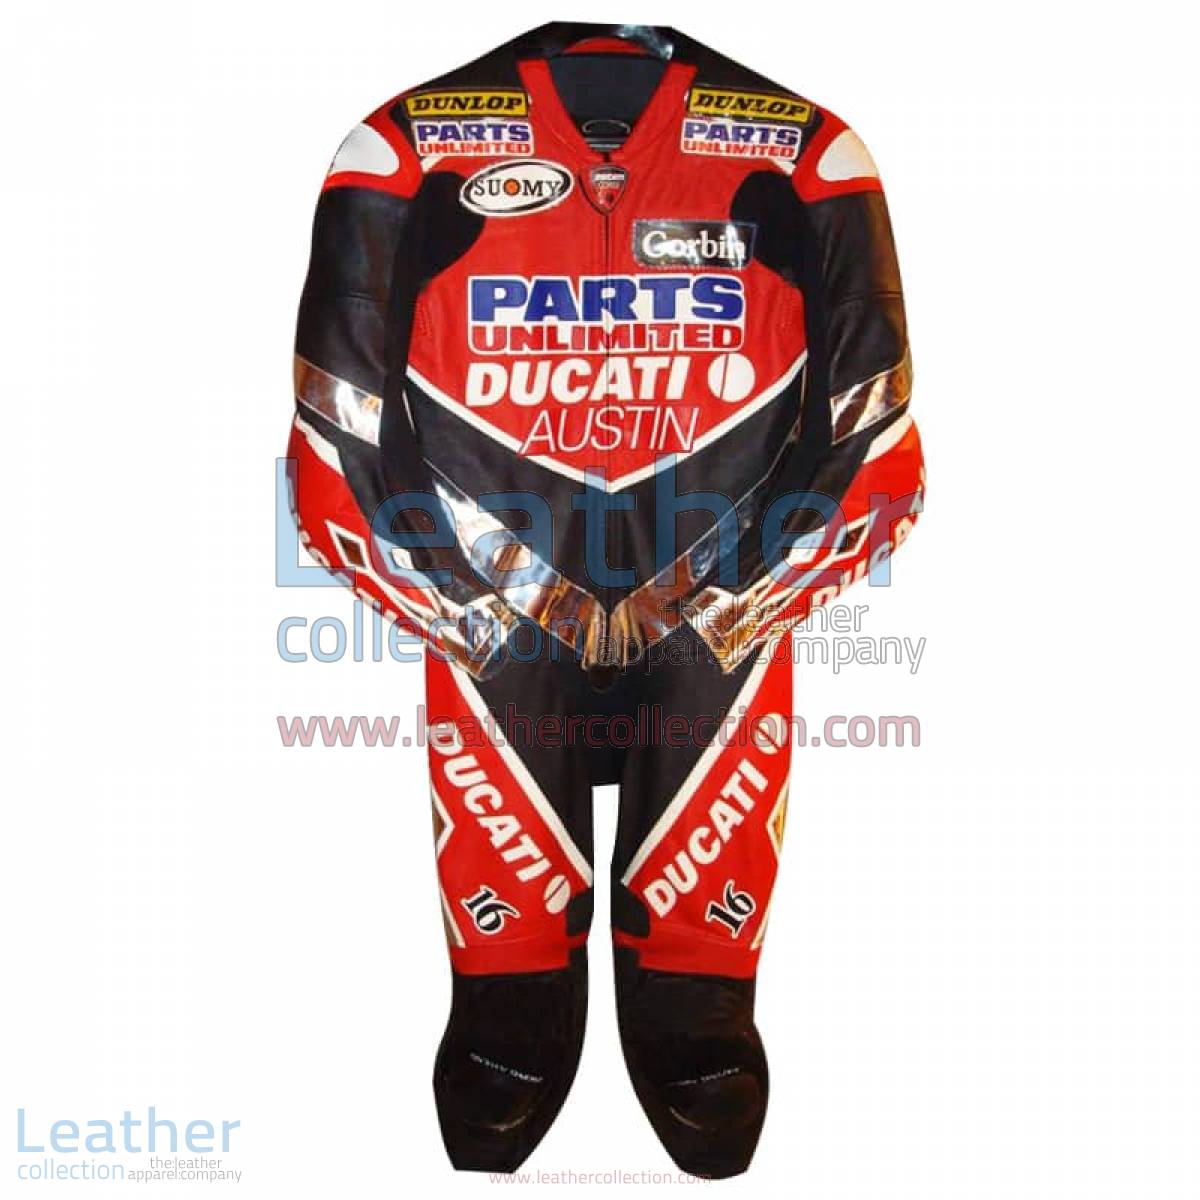 Anthony Gobert Austin Ducati 2003 AMA Race Suit